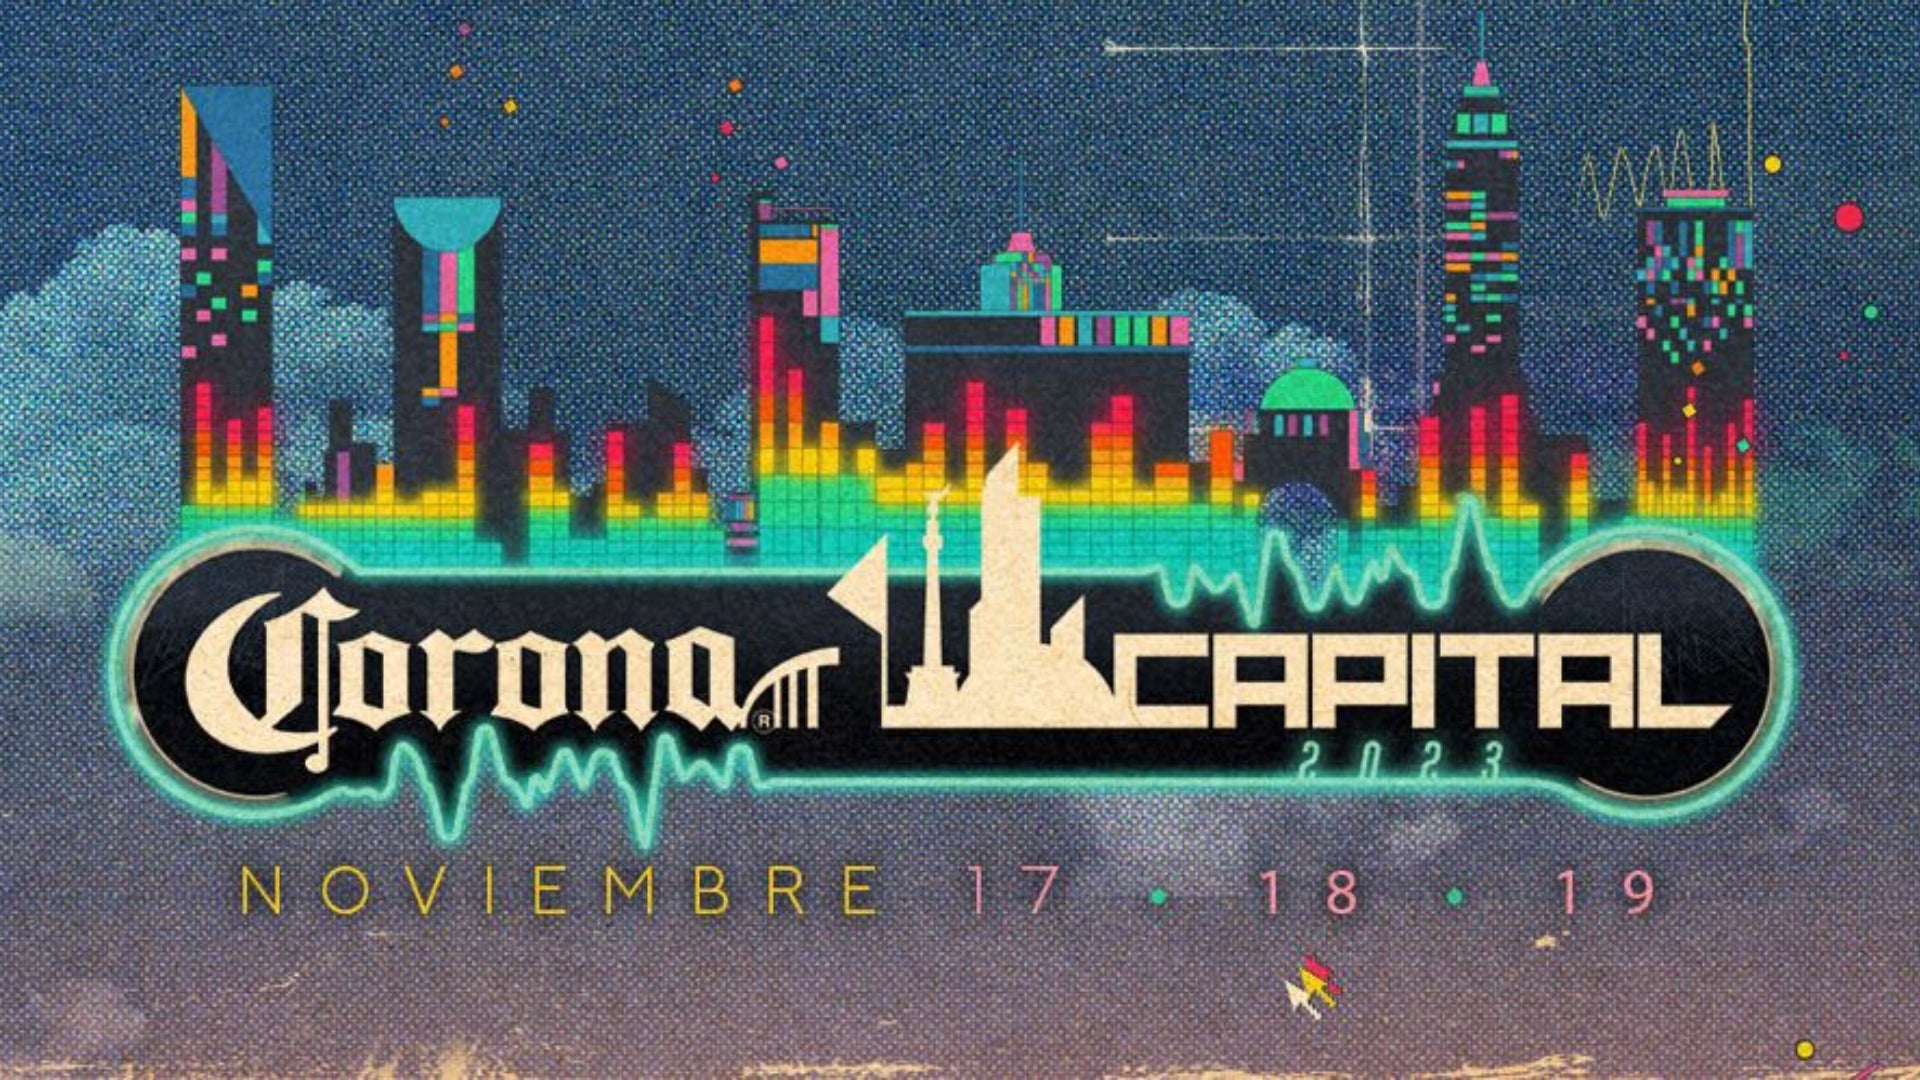 El festival mexicano que manda en el mundo, Corona Capital